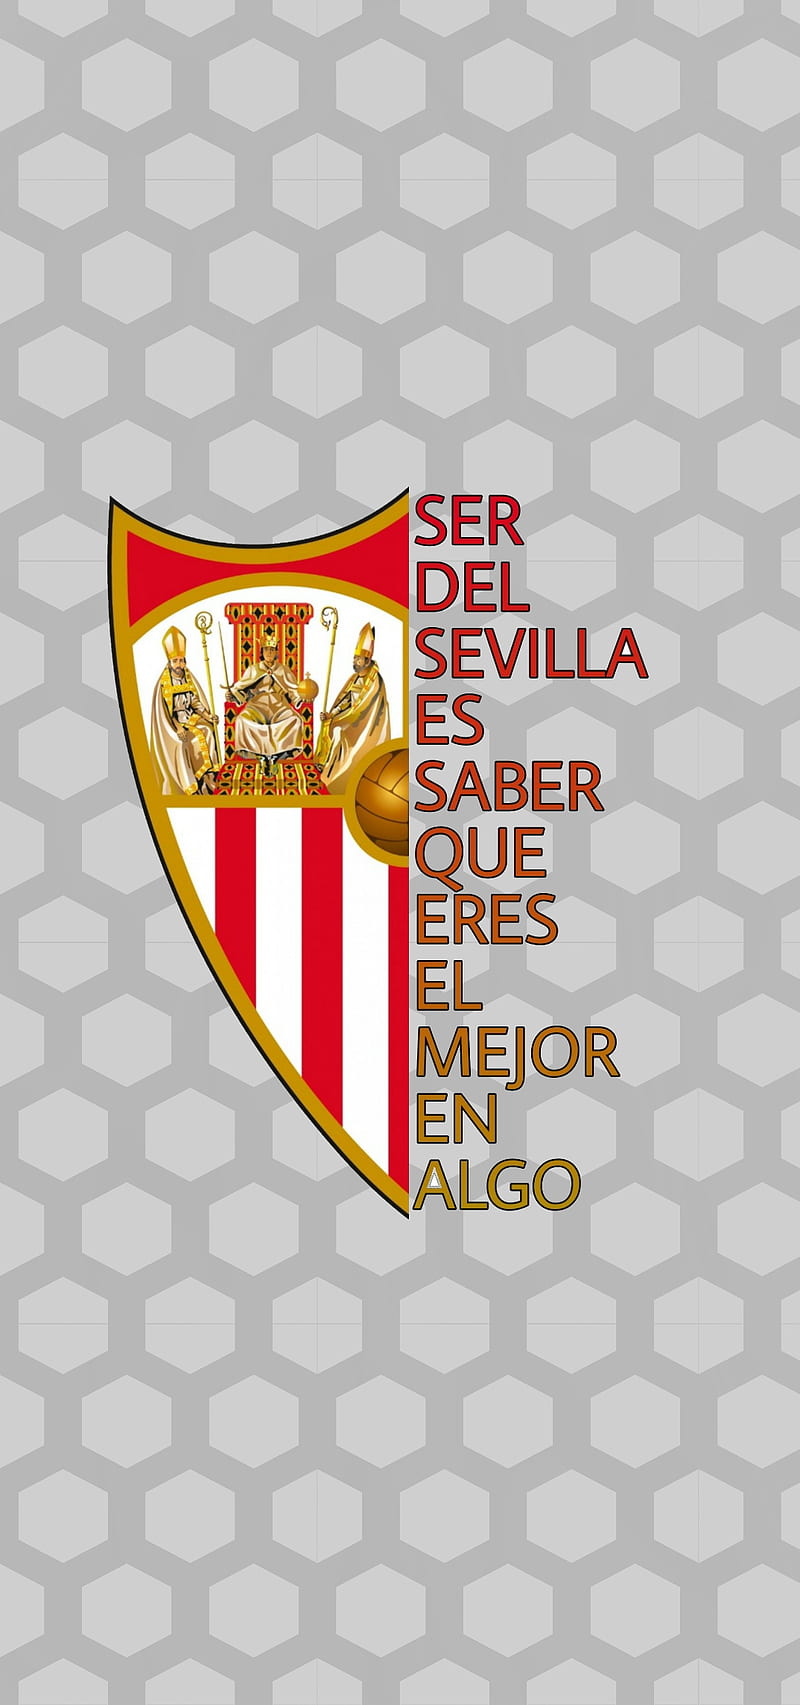 Sevilla FC (720px - 1280px)  Sevilla, Sevilla futbol club, España futbol